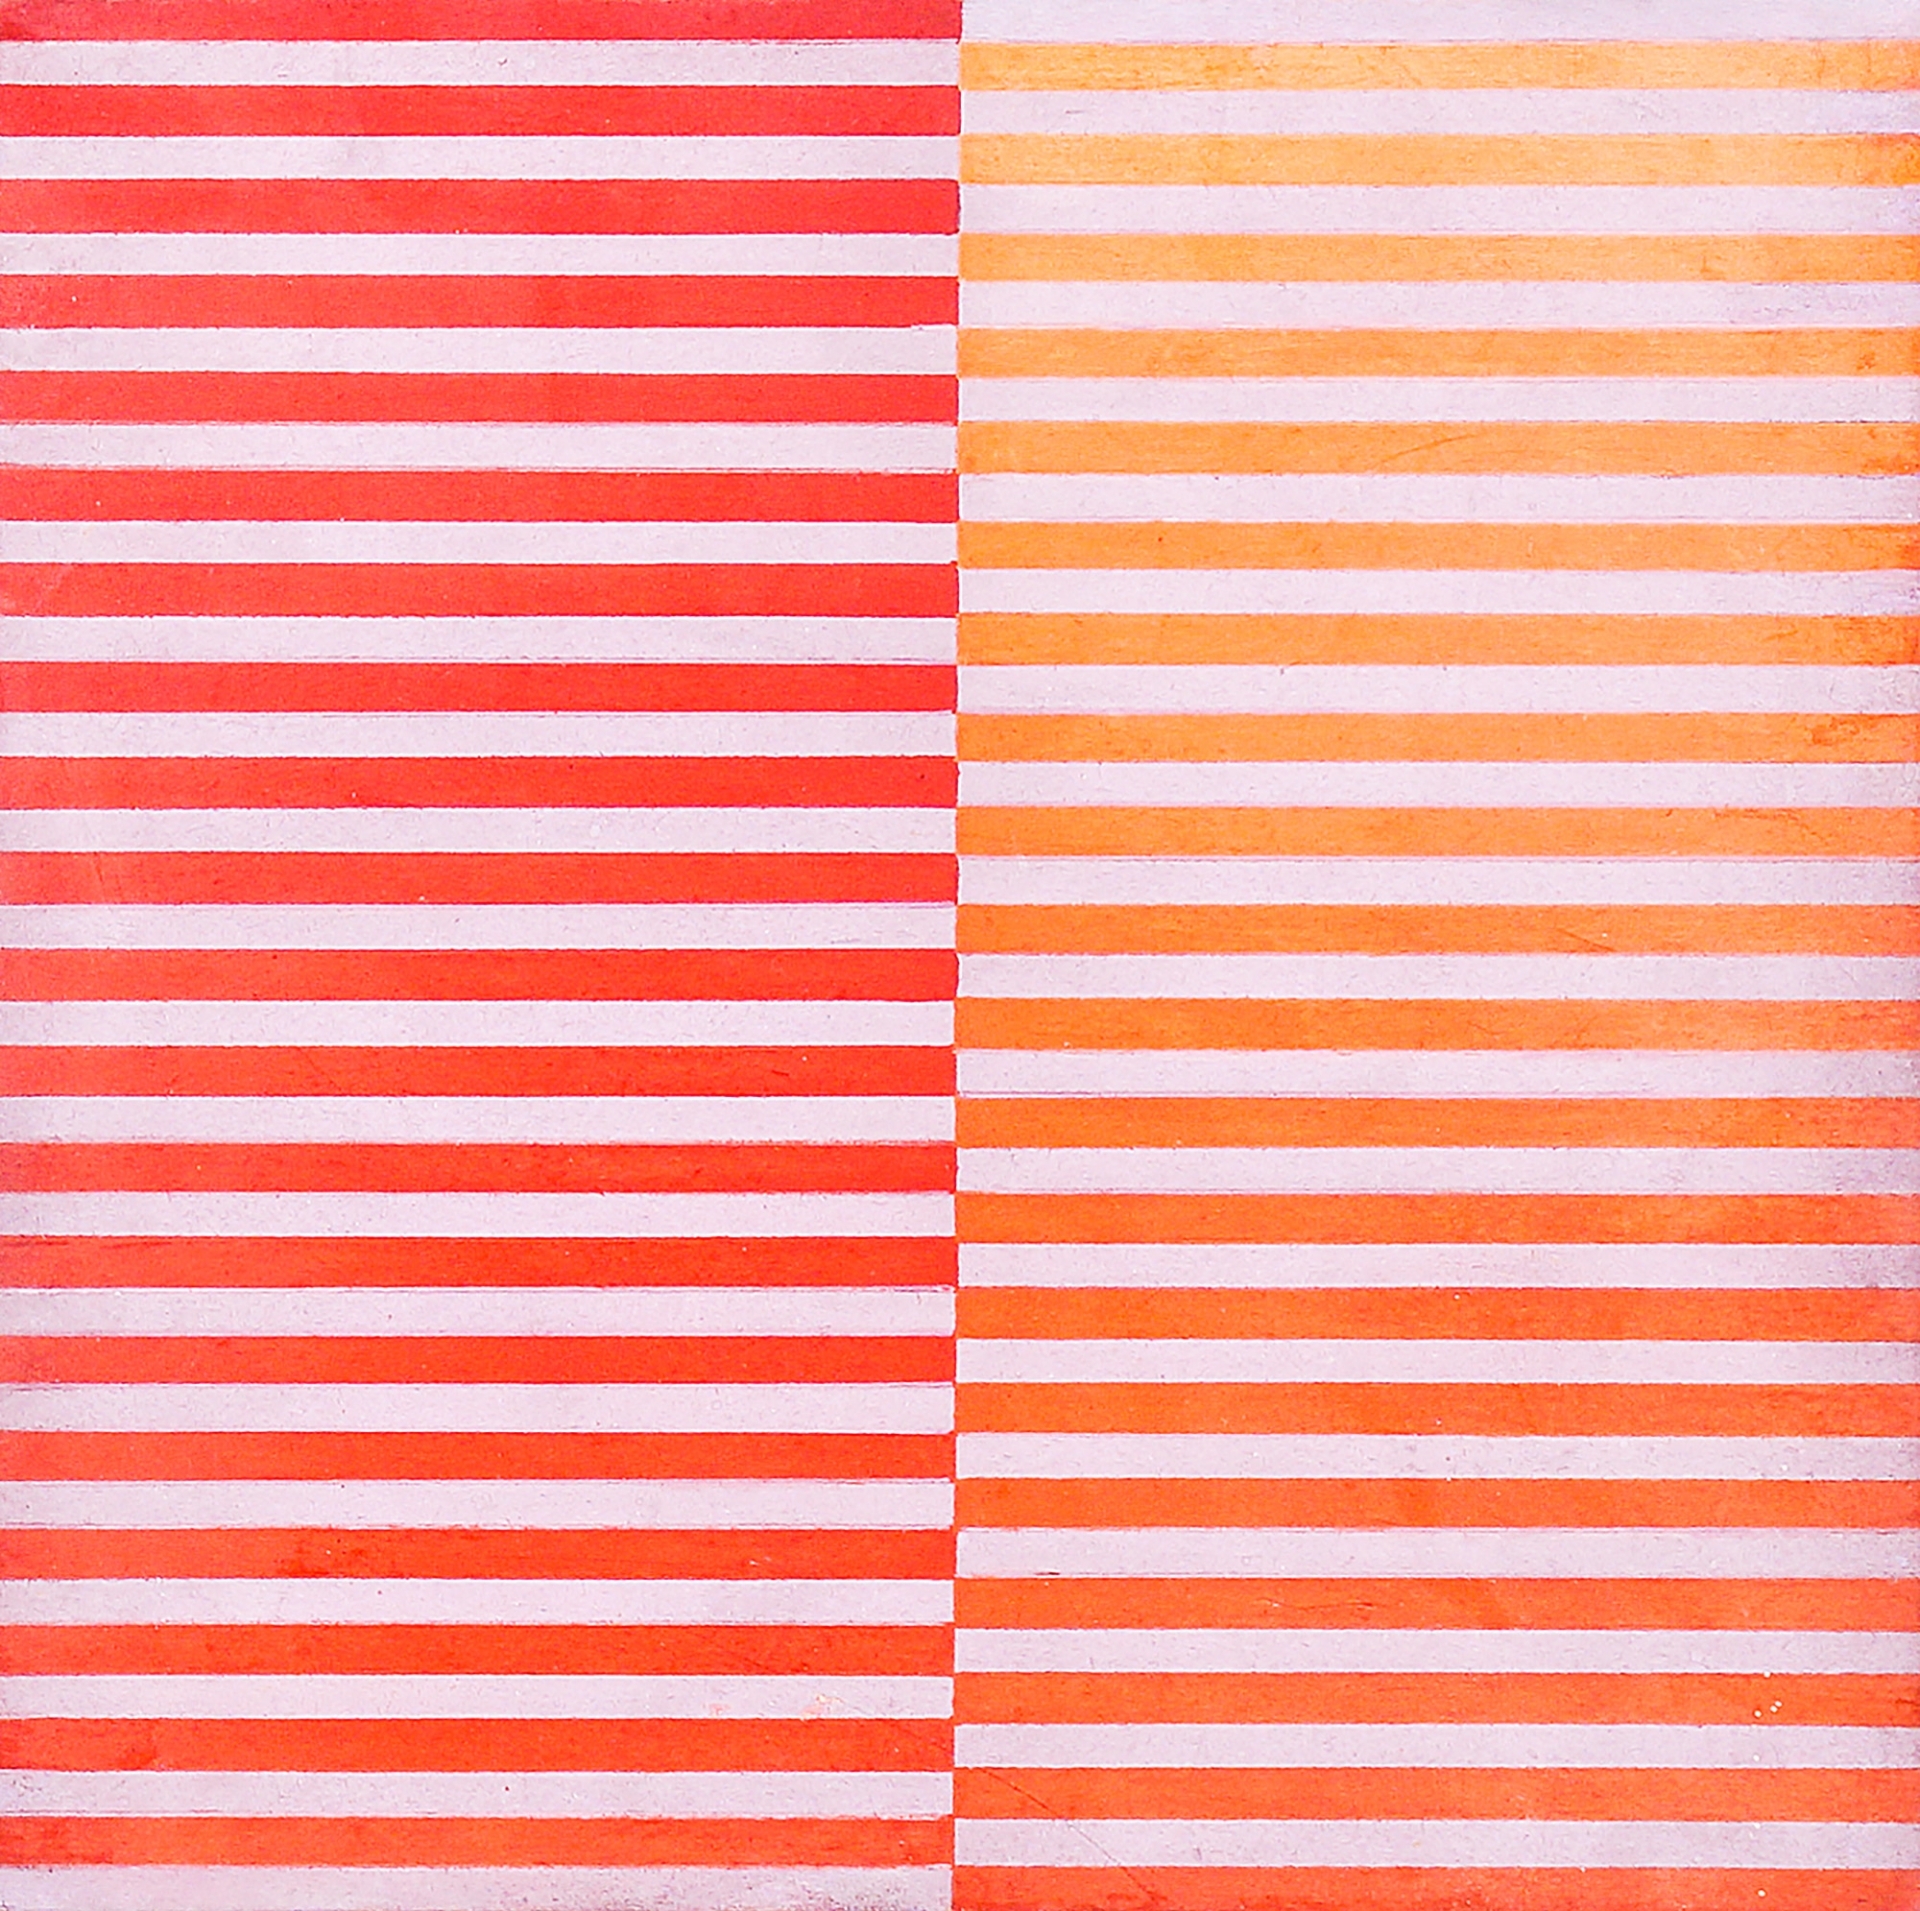 Ricerca del colore by Dadamaino, 1968